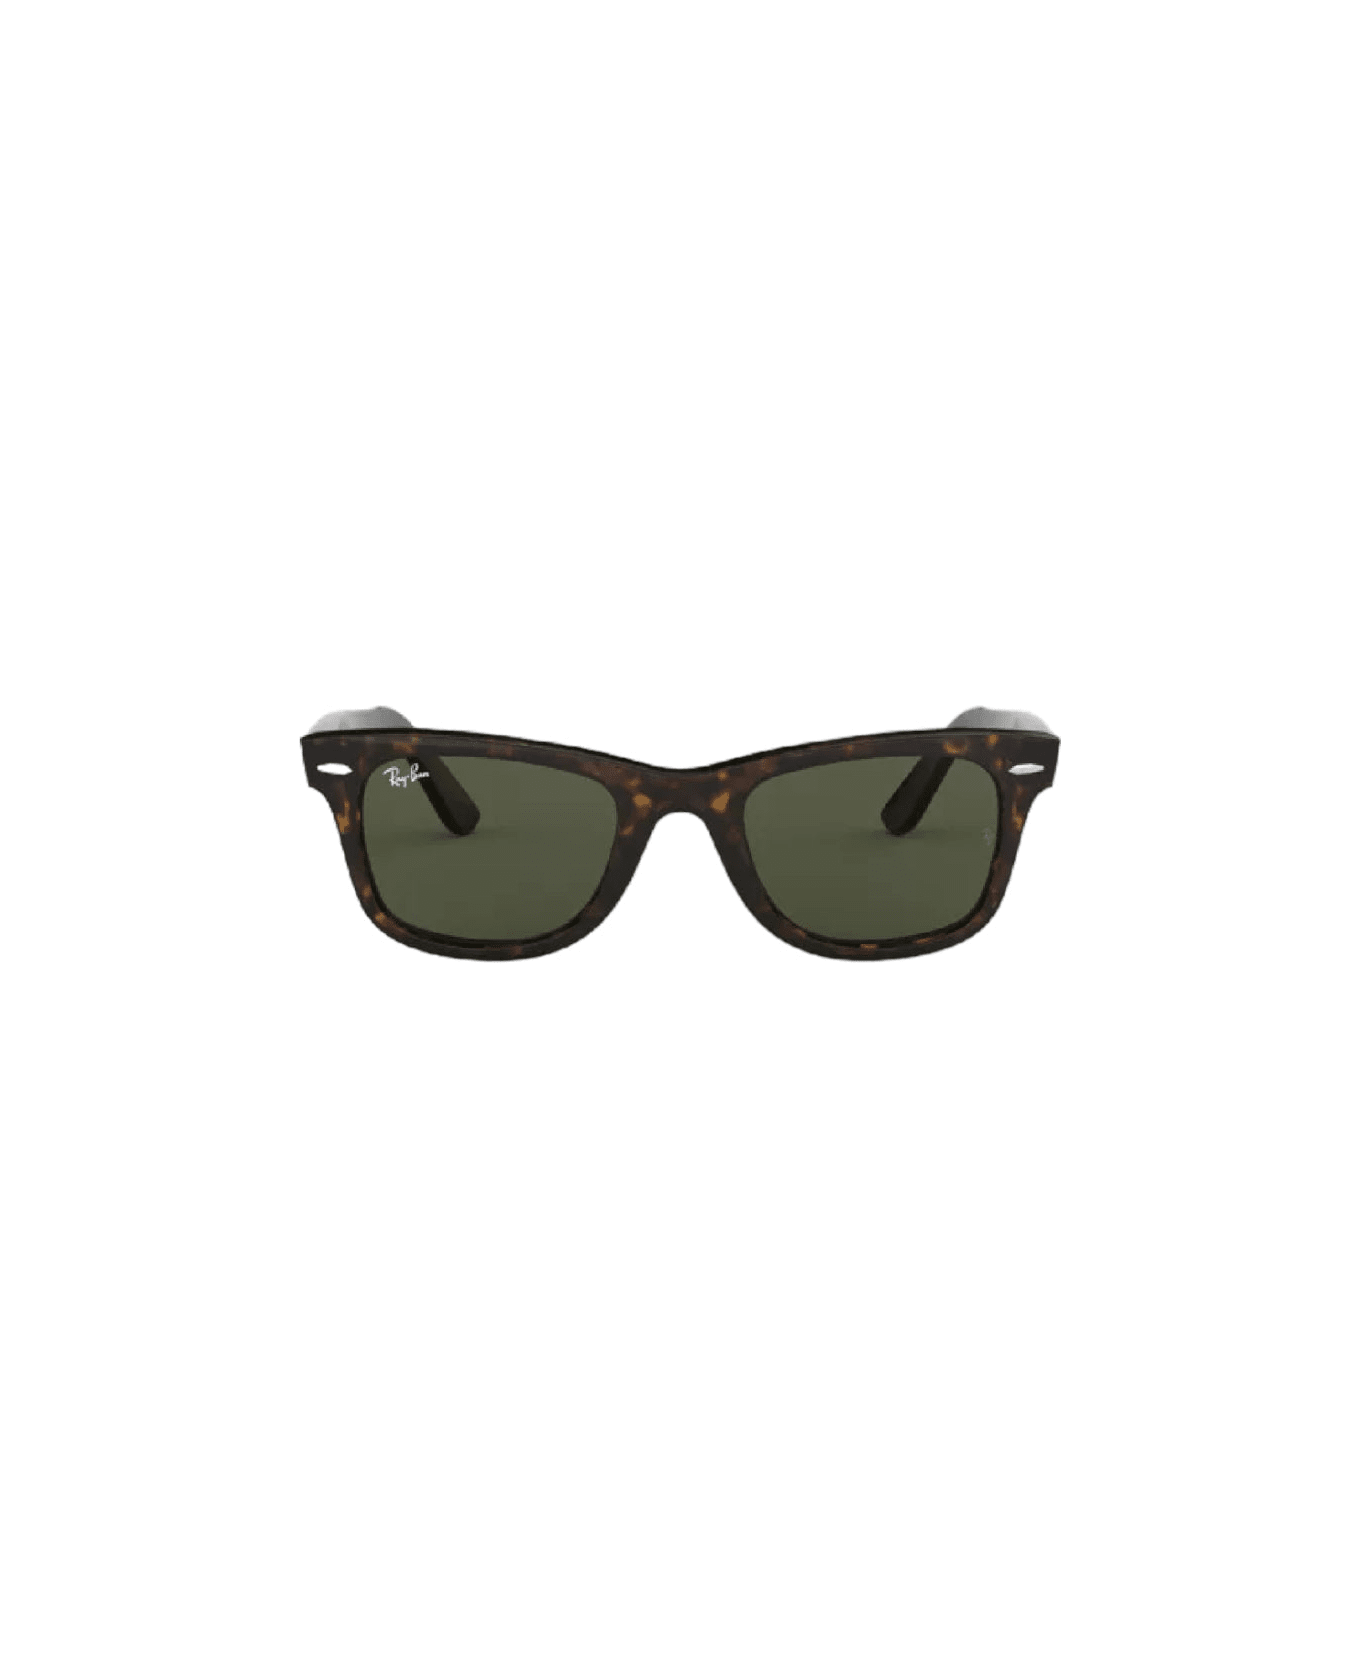 Ray-Ban Rb 2140 Sunglasses